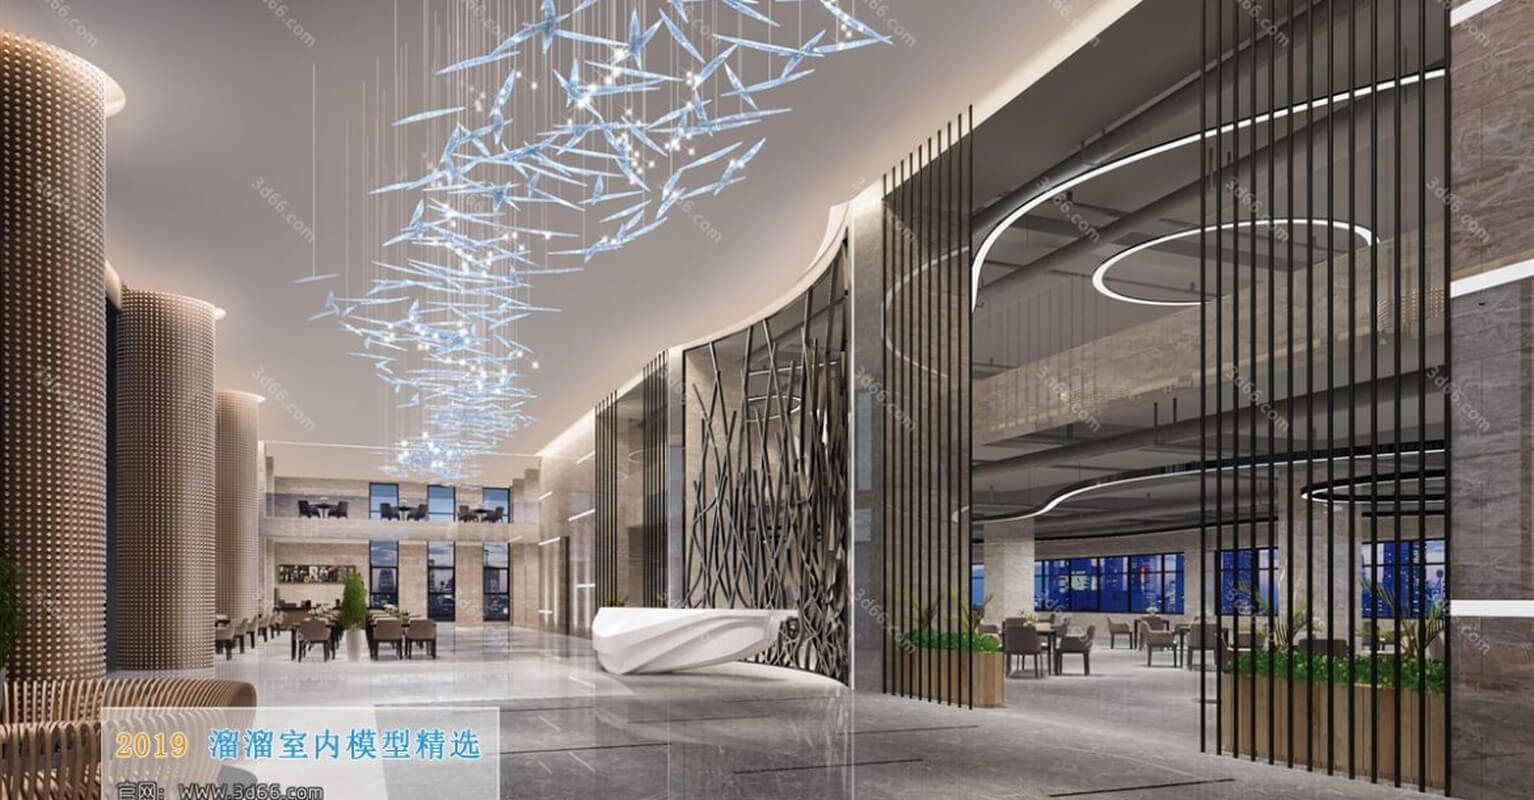 3D66 Lobby & Reception Interior 2019 Style (04)